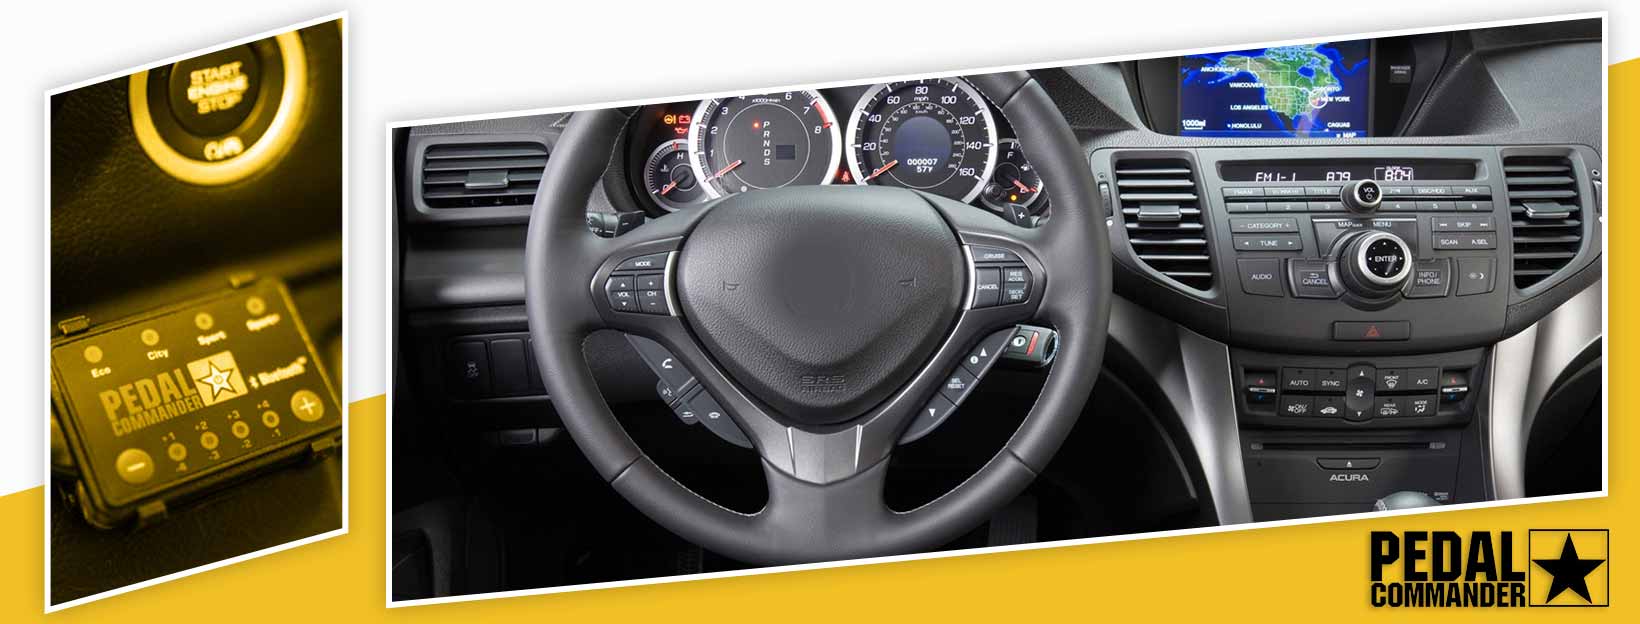 Pedal Commander for Acura TSX - interior